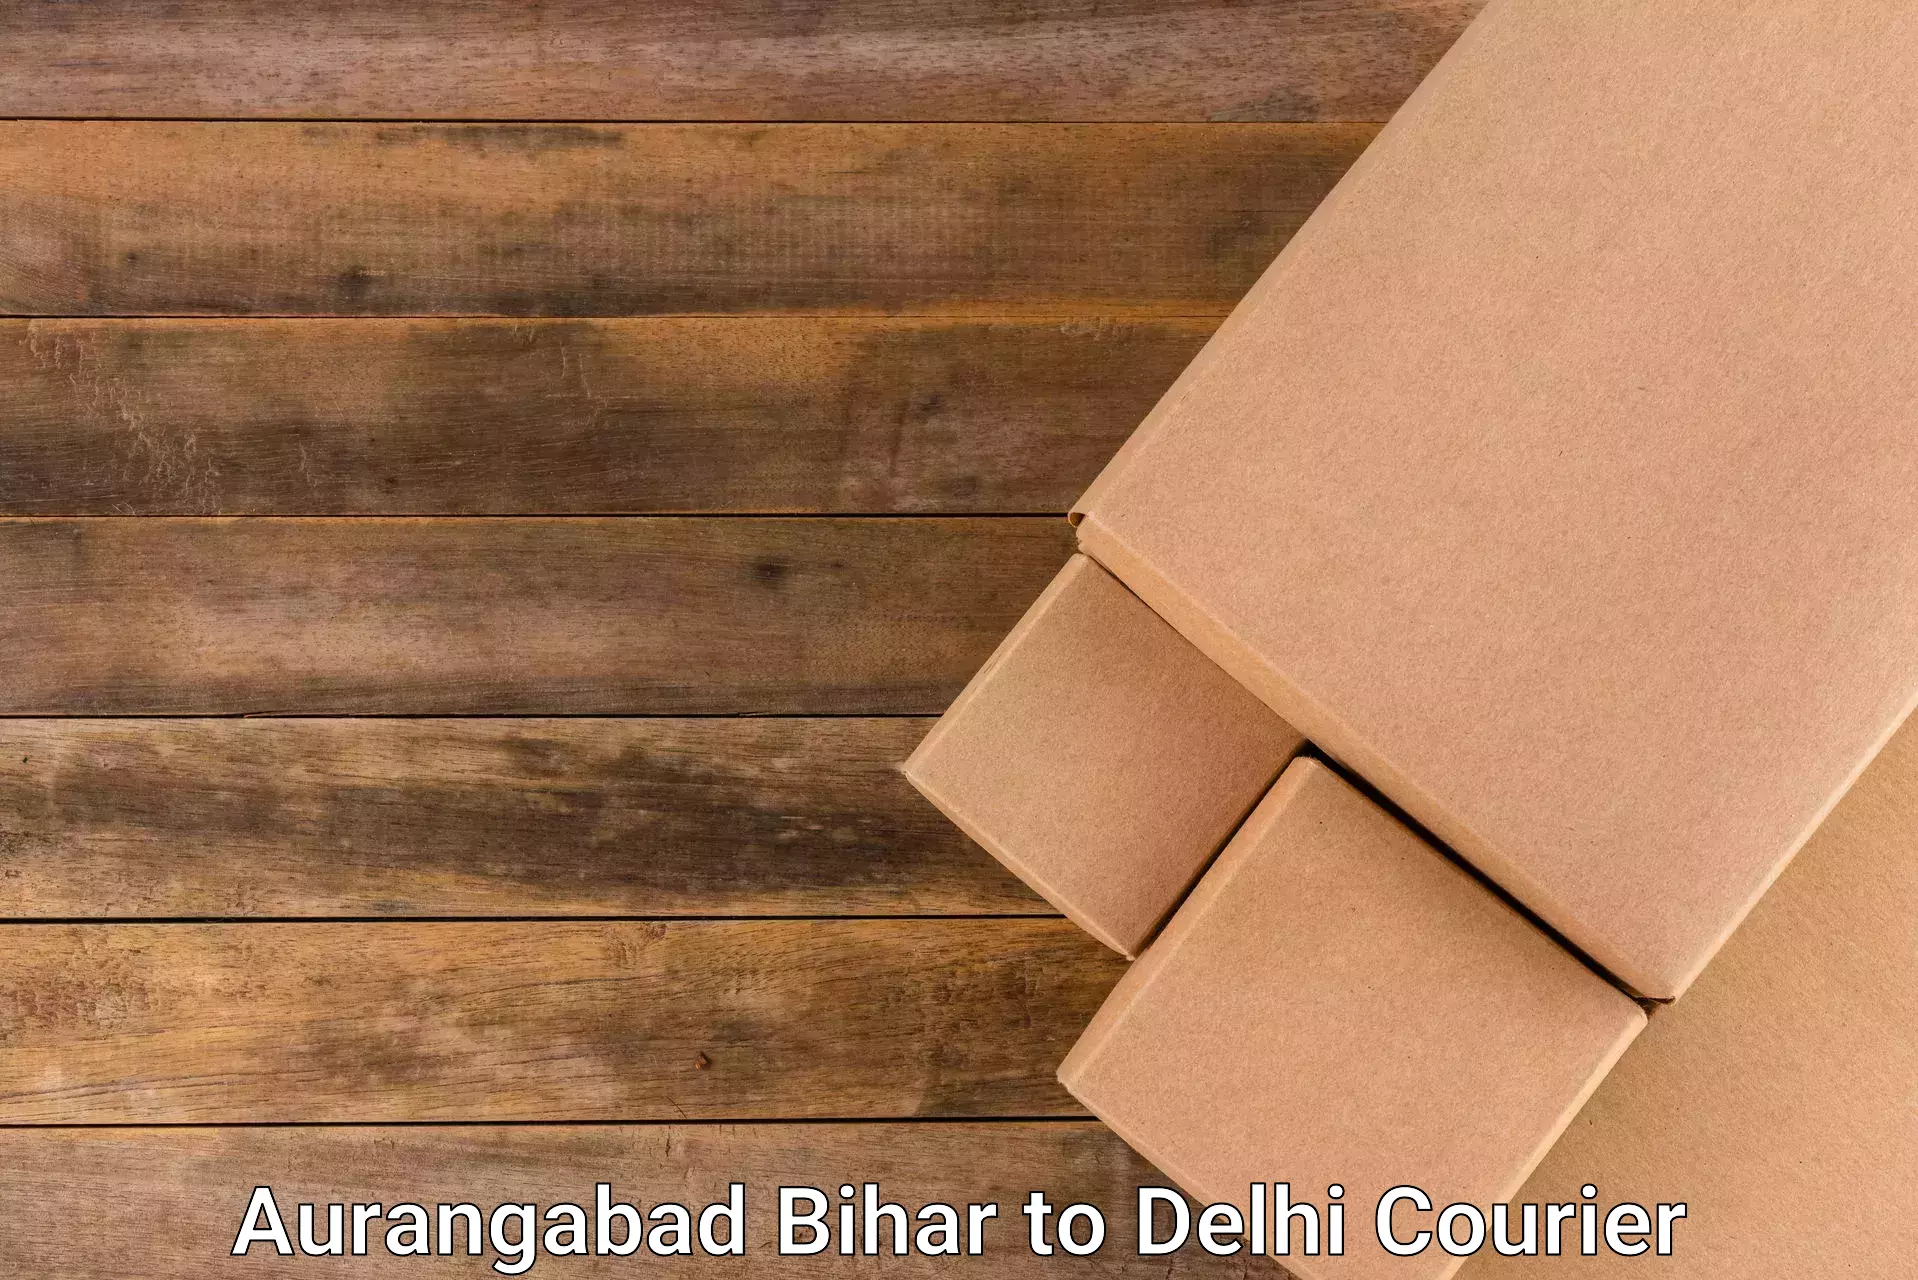 International parcel service Aurangabad Bihar to Sarojini Nagar